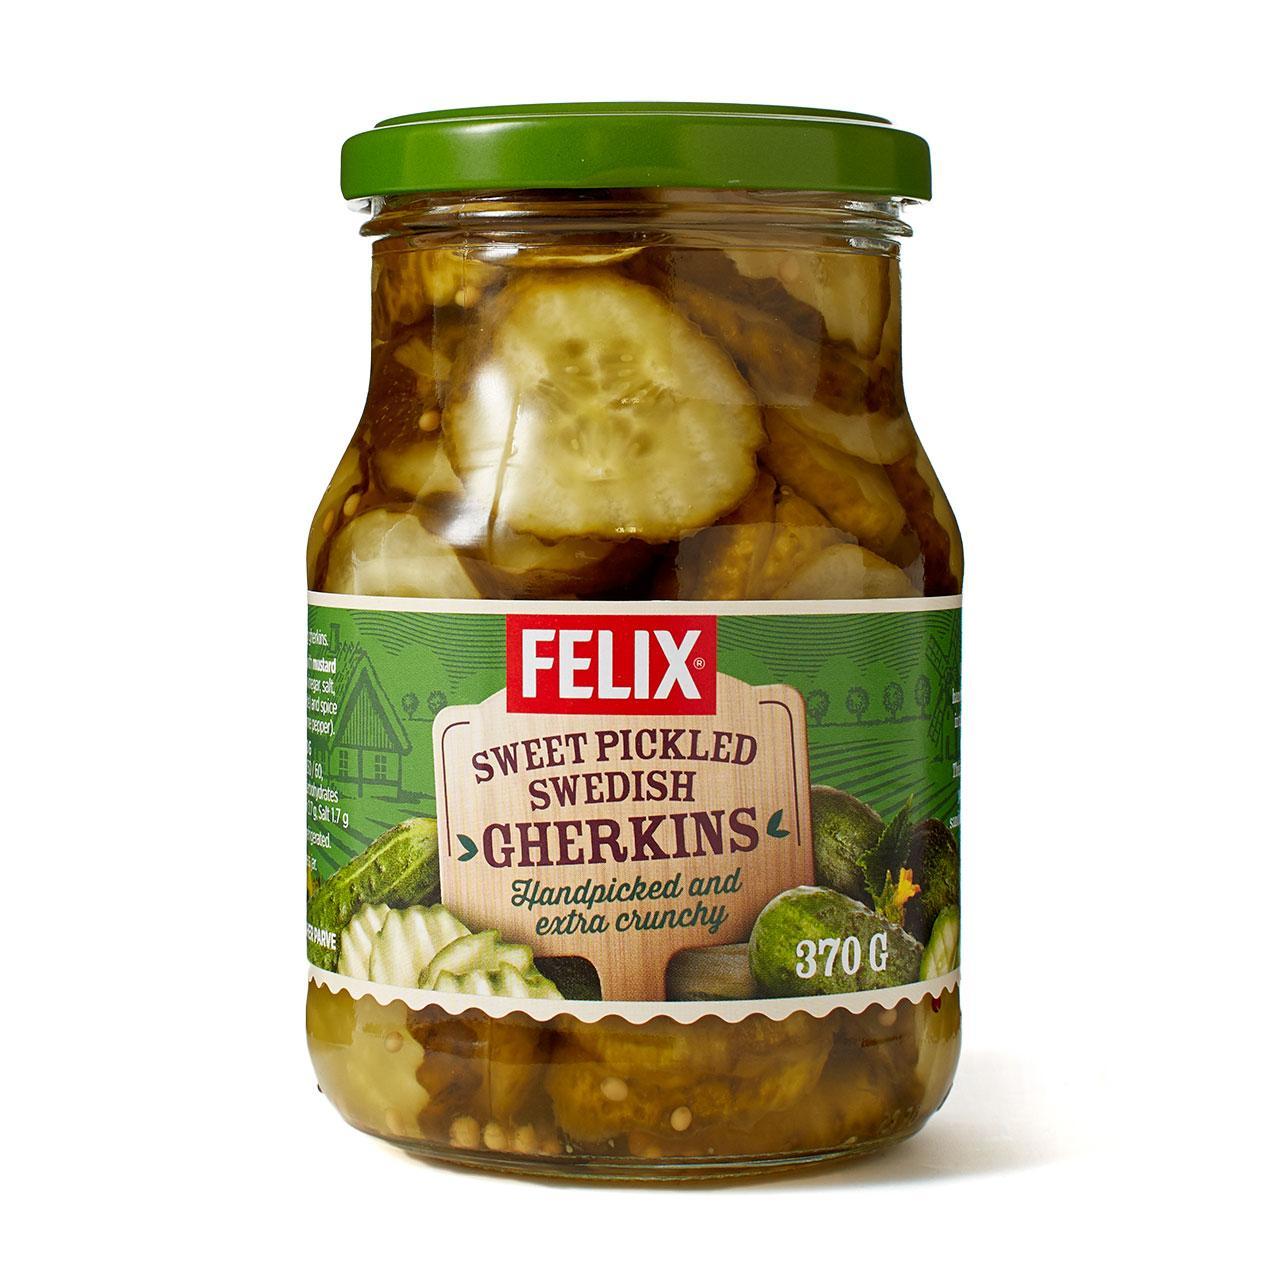 Felix Smorgasgurka Sliced Pickled Gherkins 370g